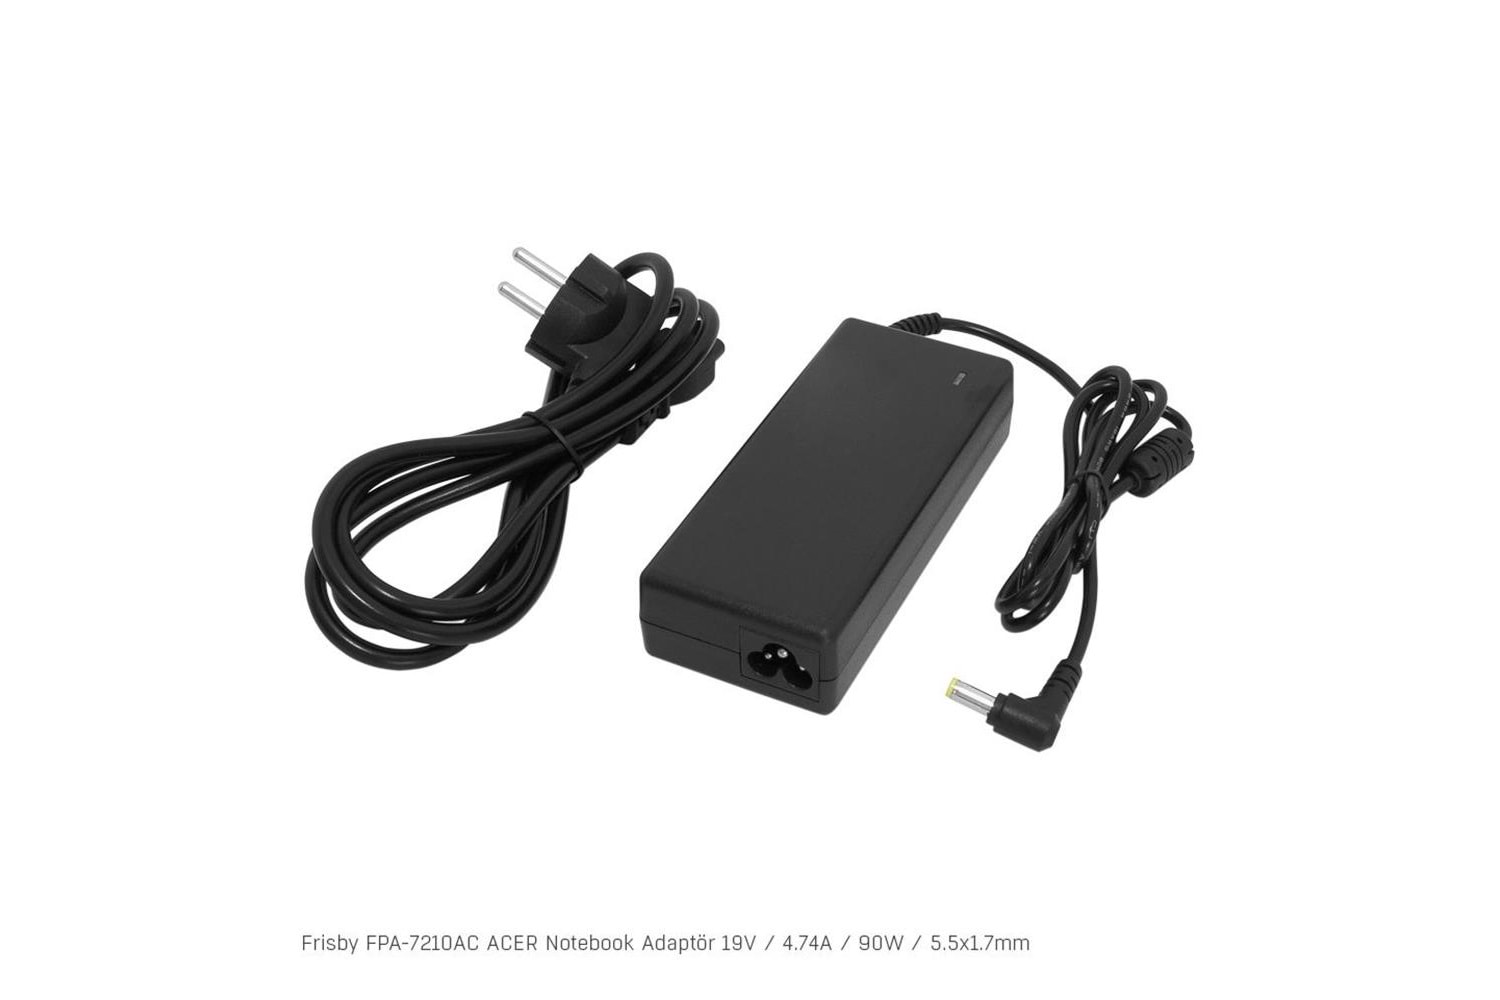 Frisby FPA-7210AC Notebook Adaptör (Acer) 19V 4.74A (Uç Boyutu : 5.5 x 1.7 mm)